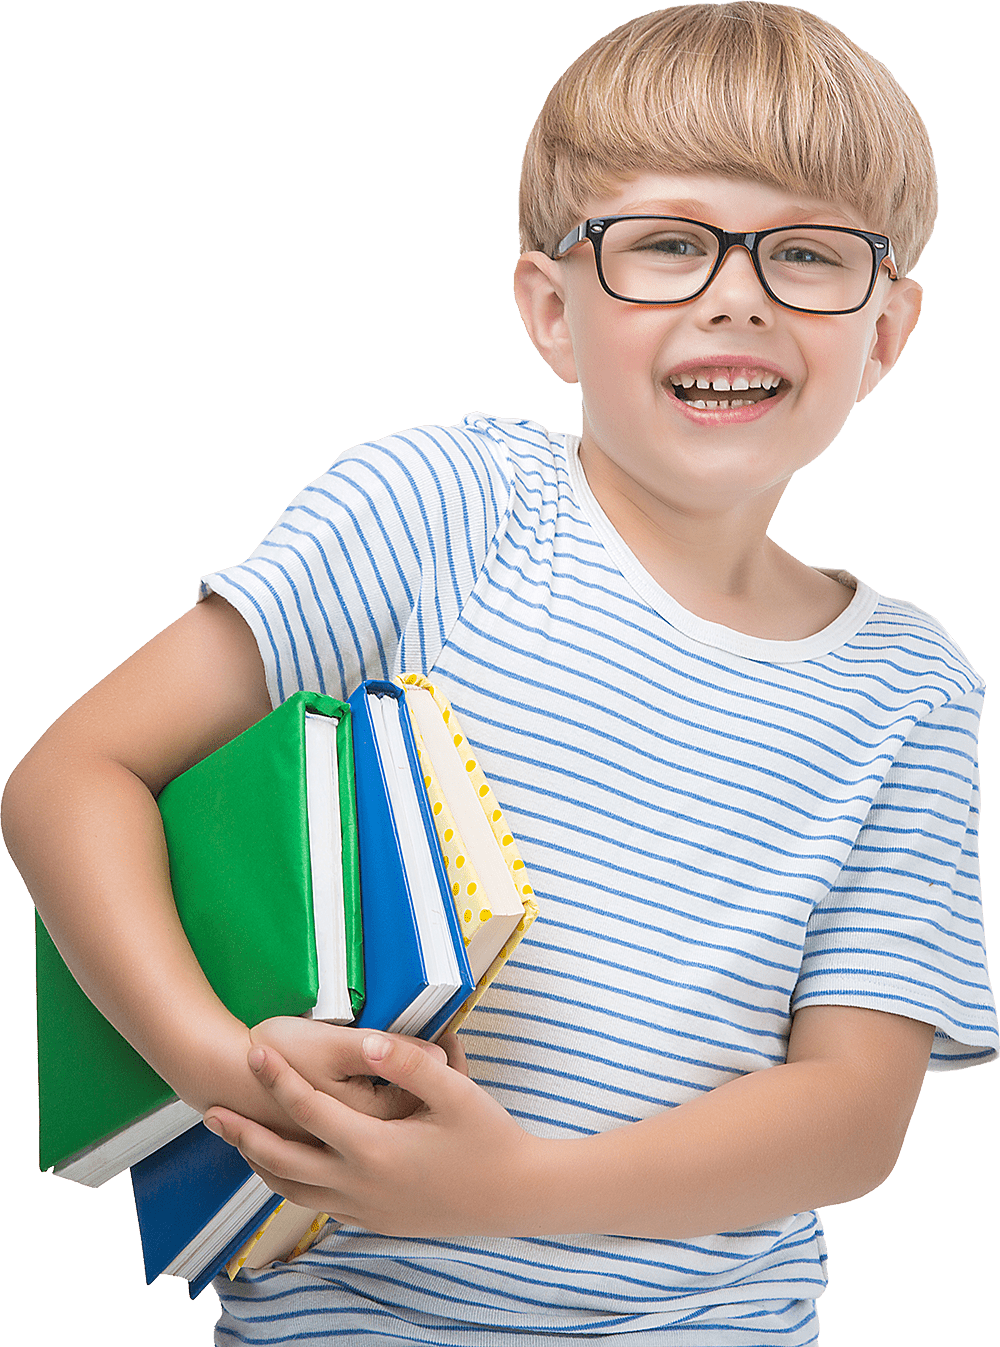 School Age Child Benefits From Homework - Preschool & Daycare Serving El Cajon, Lakeside And Santee CA